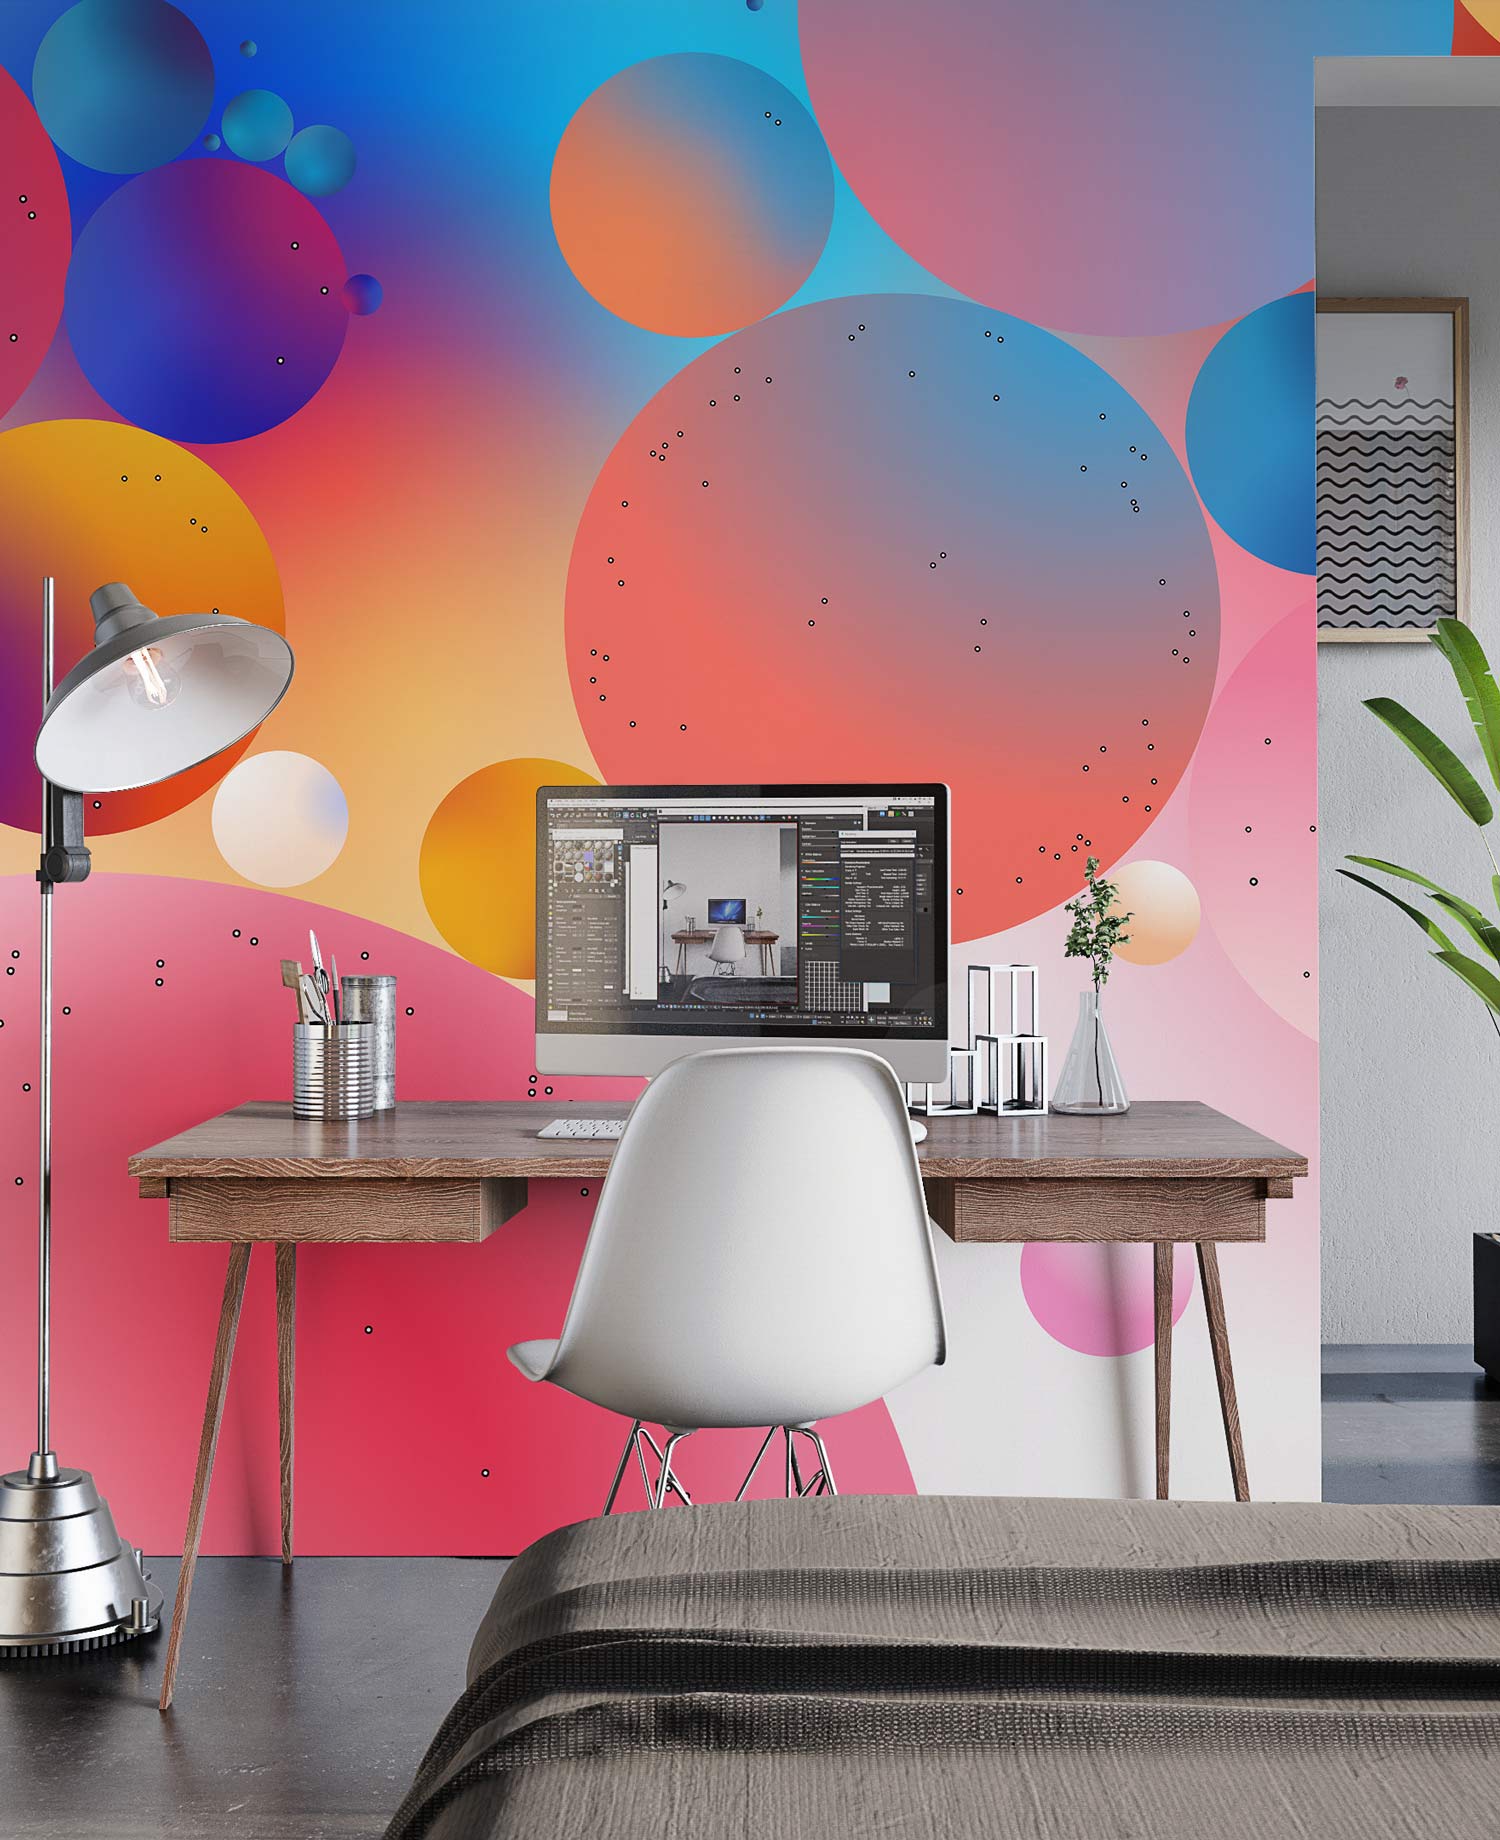 Abstract Balls Wallpaper Mural For Office Decor